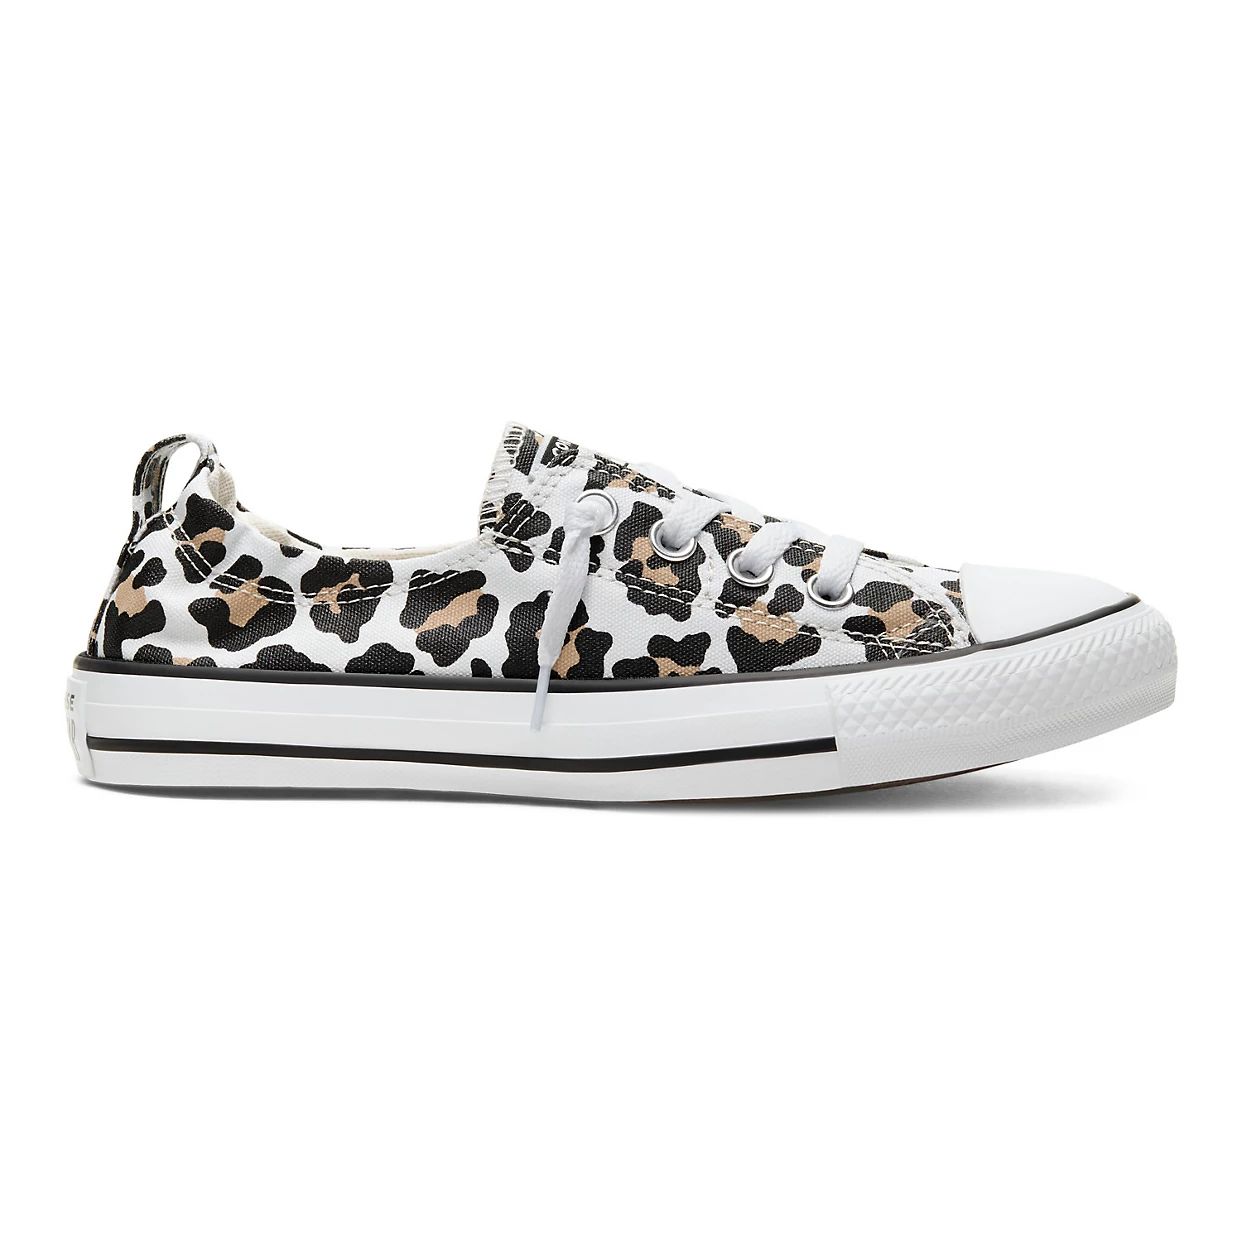 Women's Converse Chuck Taylor All Star Shoreline Leopard Sneakers | Kohl's